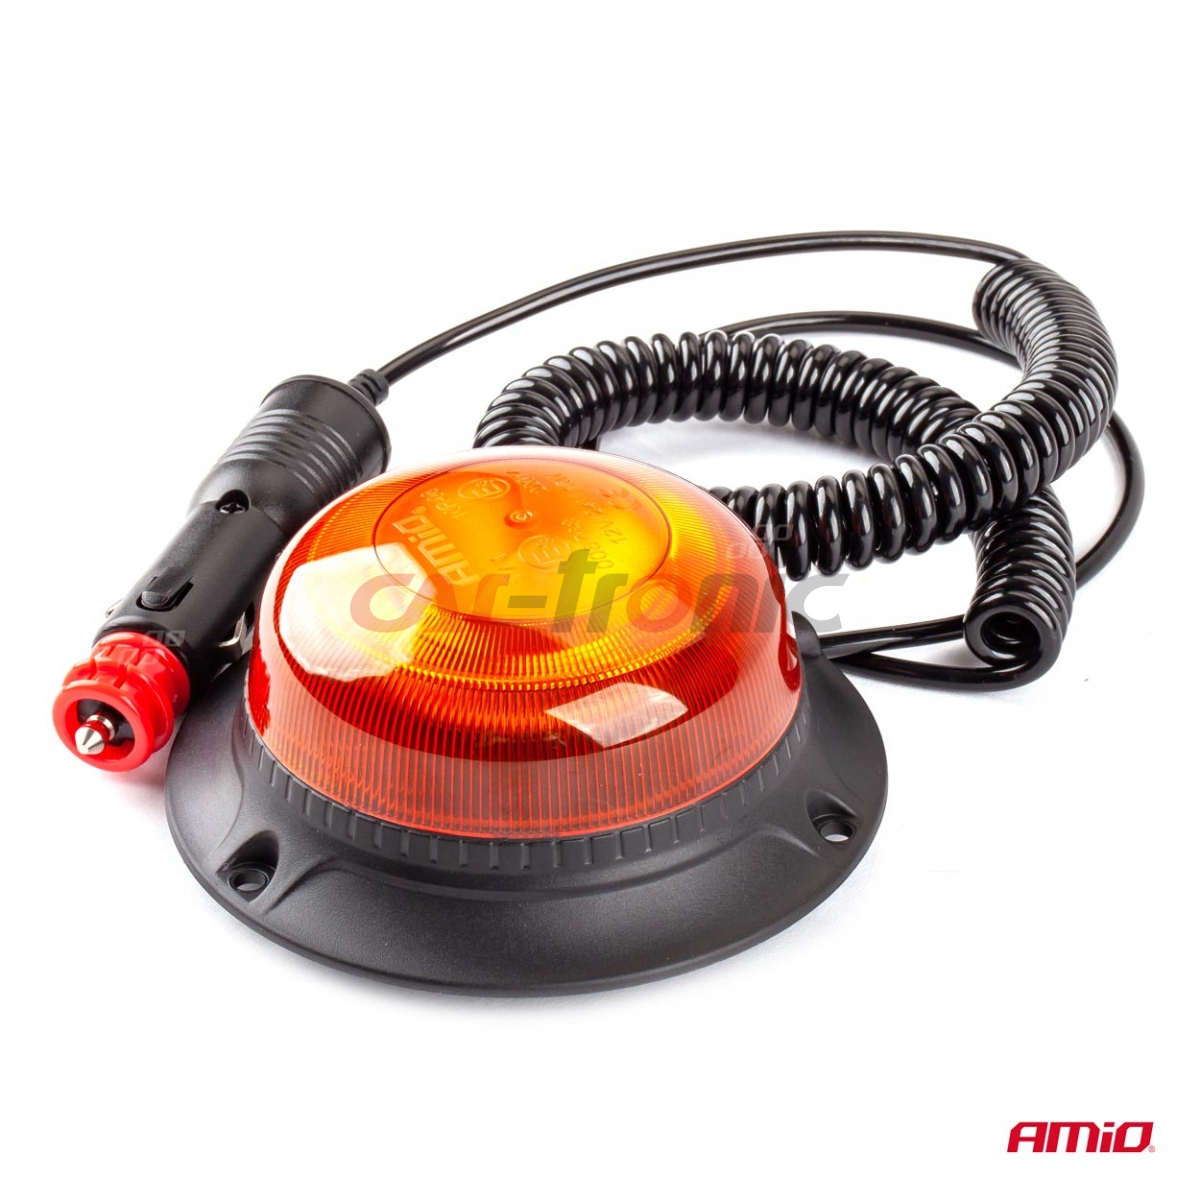 Lampa ostrzegawcza mini kogut 18 LED magnes niska R65 R10 12-24V W21m AMIO-02925